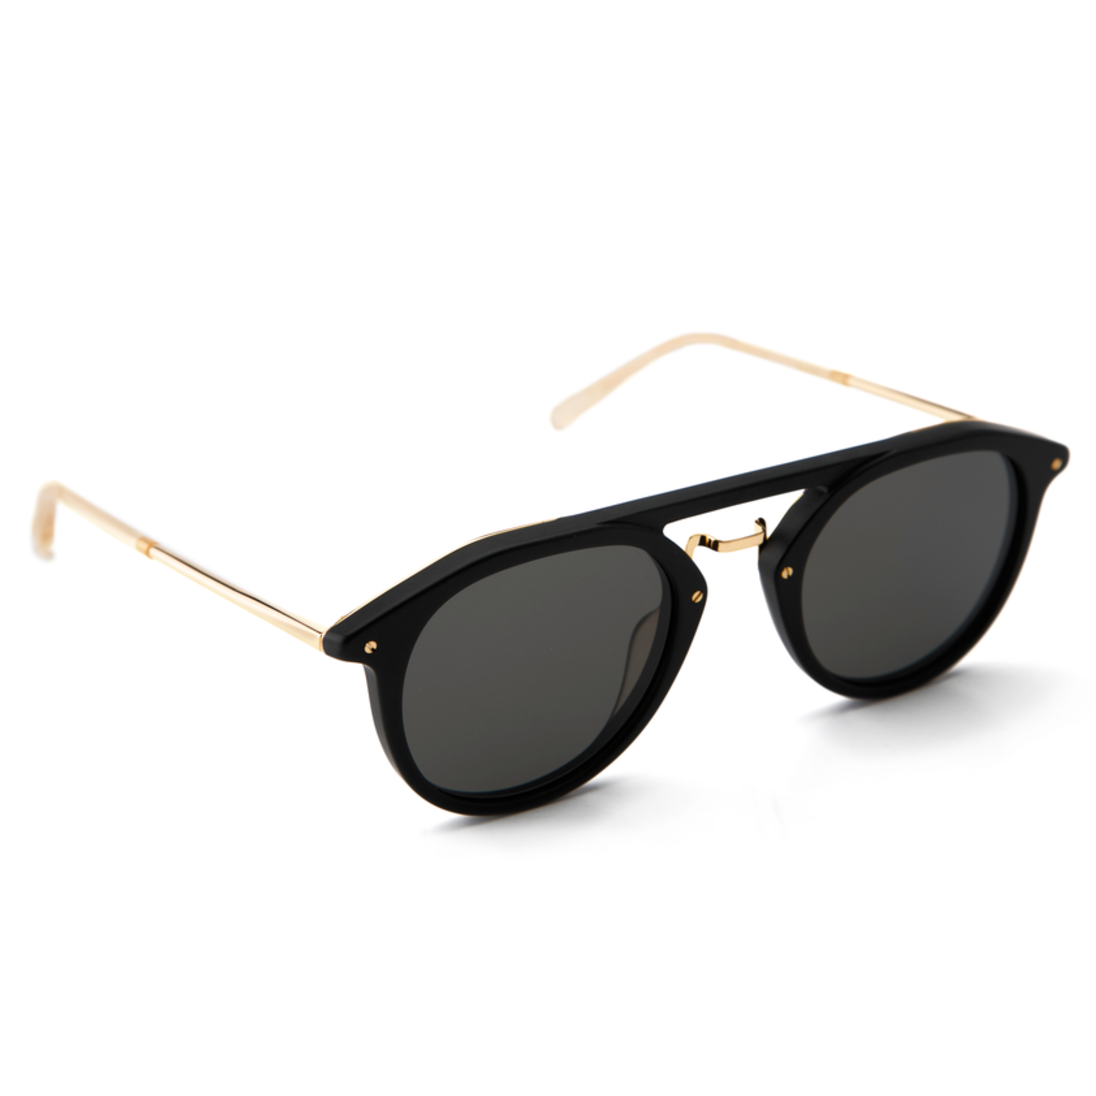 Krewe ‘Gravier’ Sunglasses in Black & Gold